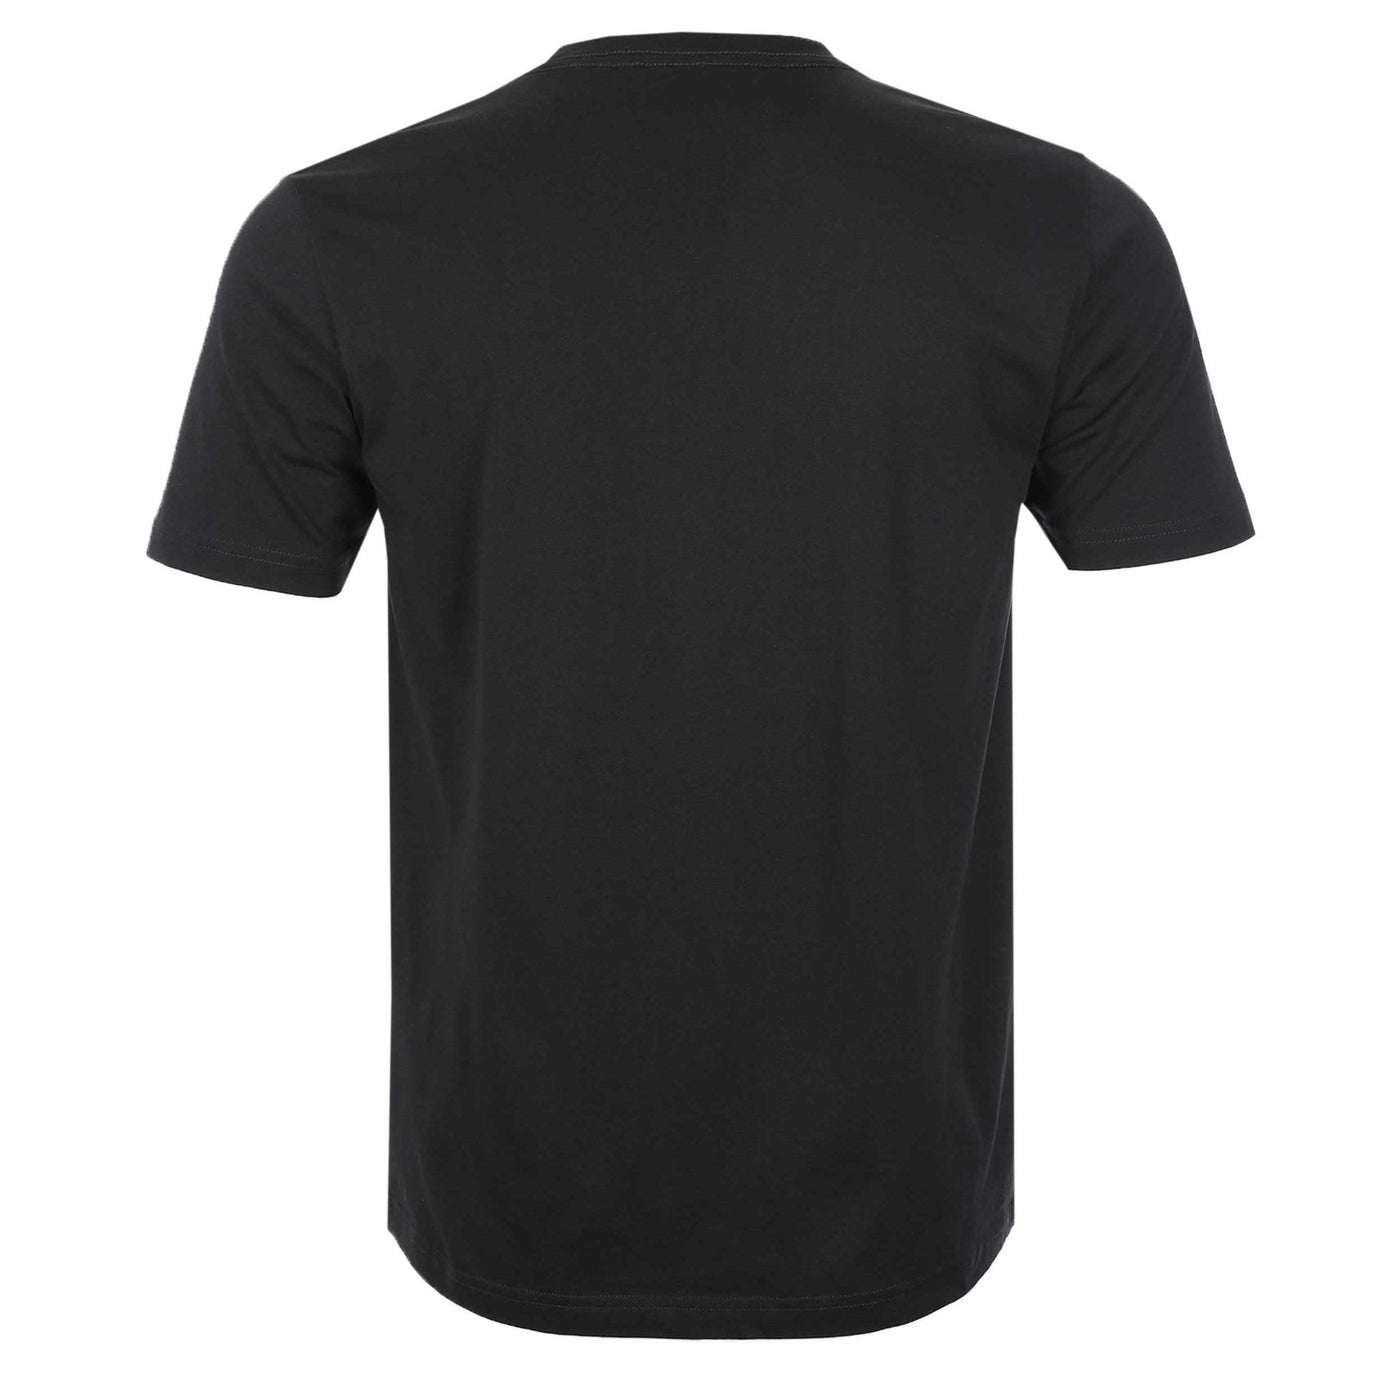 Paul Smith Stripe Pocket T Shirt in Black Back